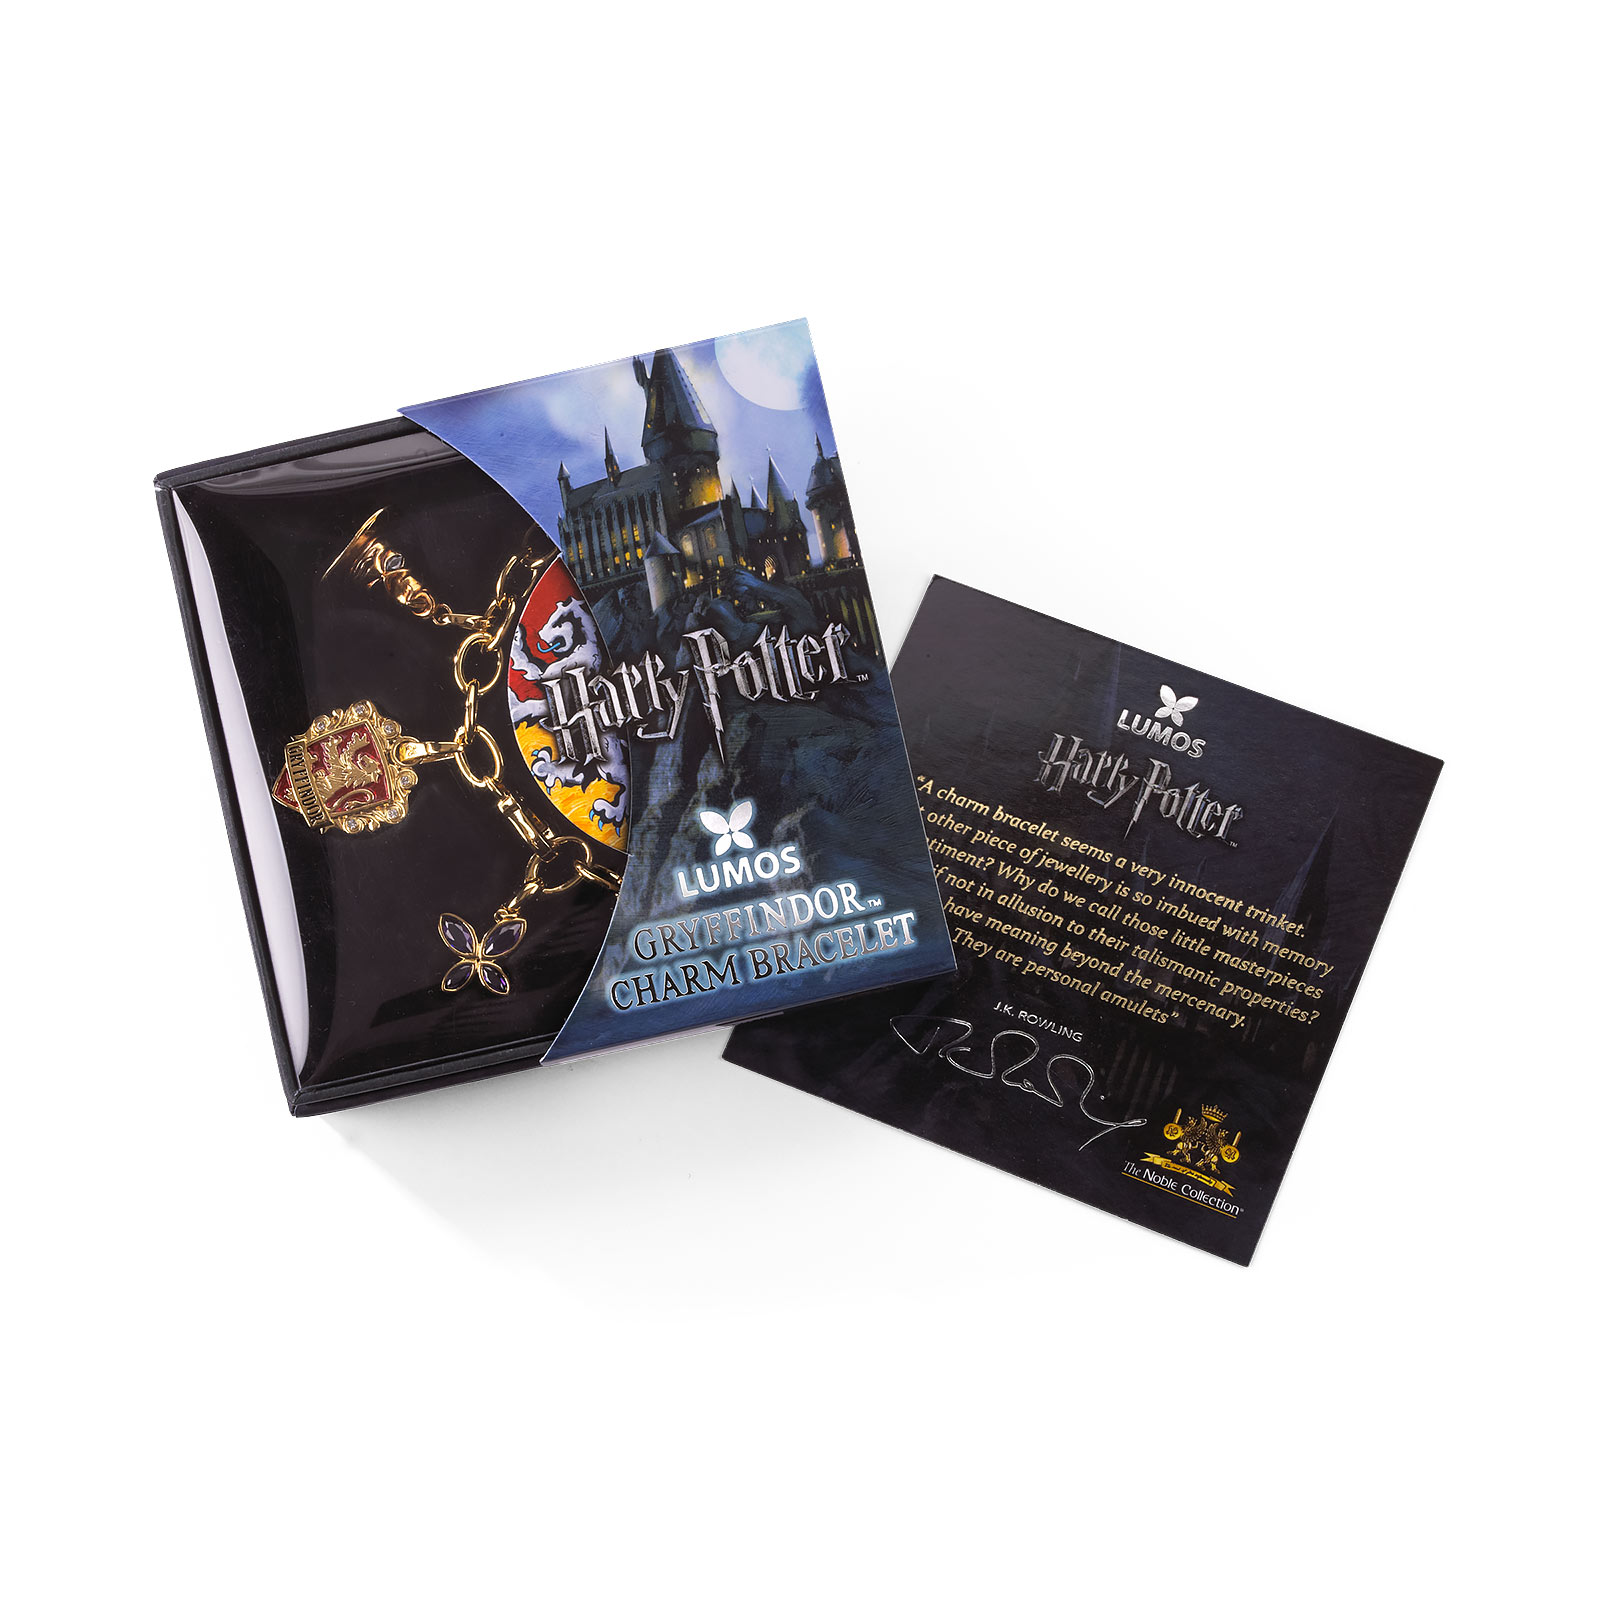 Harry Potter - Lumos Gryffindor Charm Bracelet